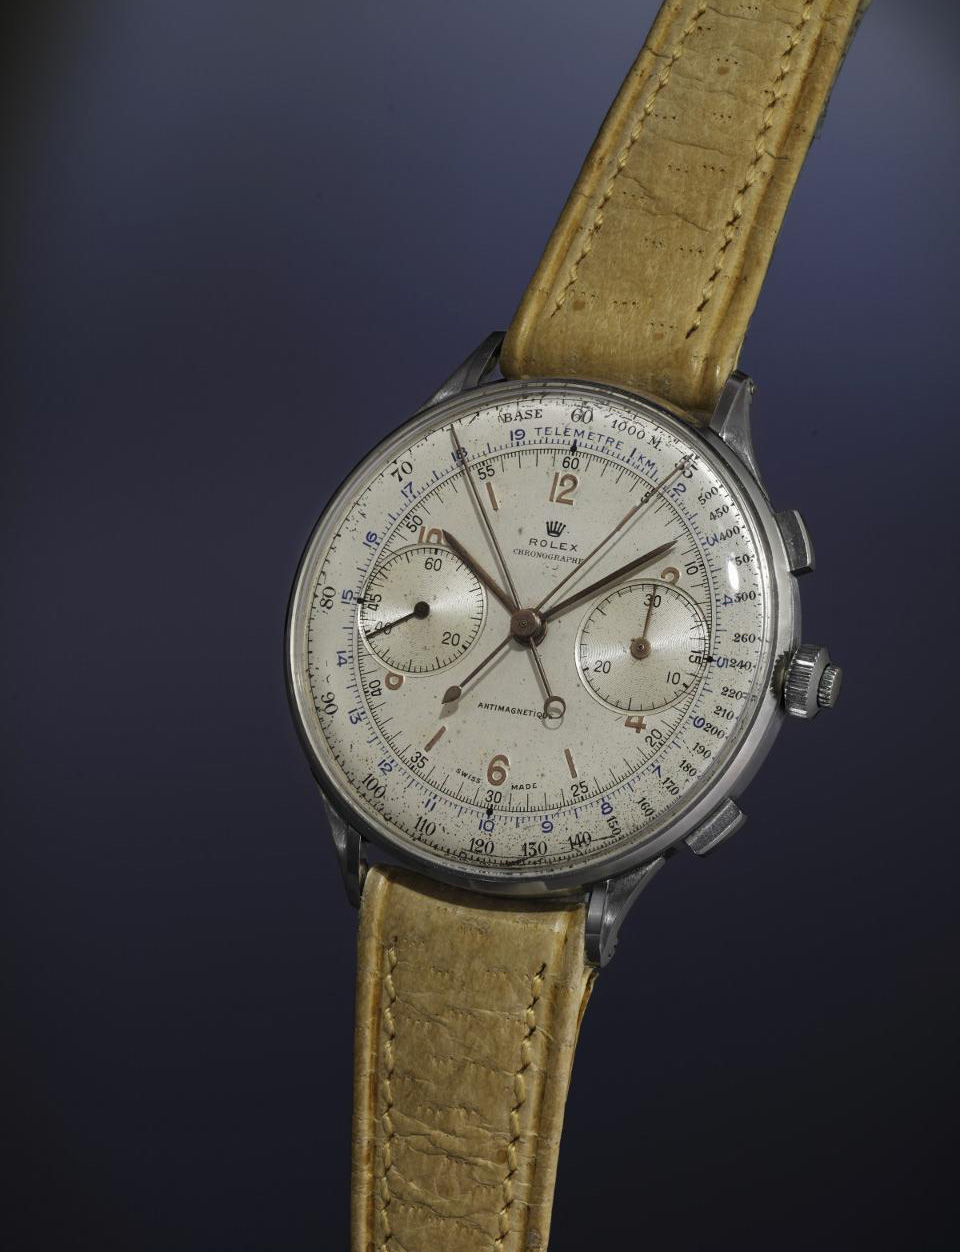 Rolex Split-Seconds Chronograph 4113 watch